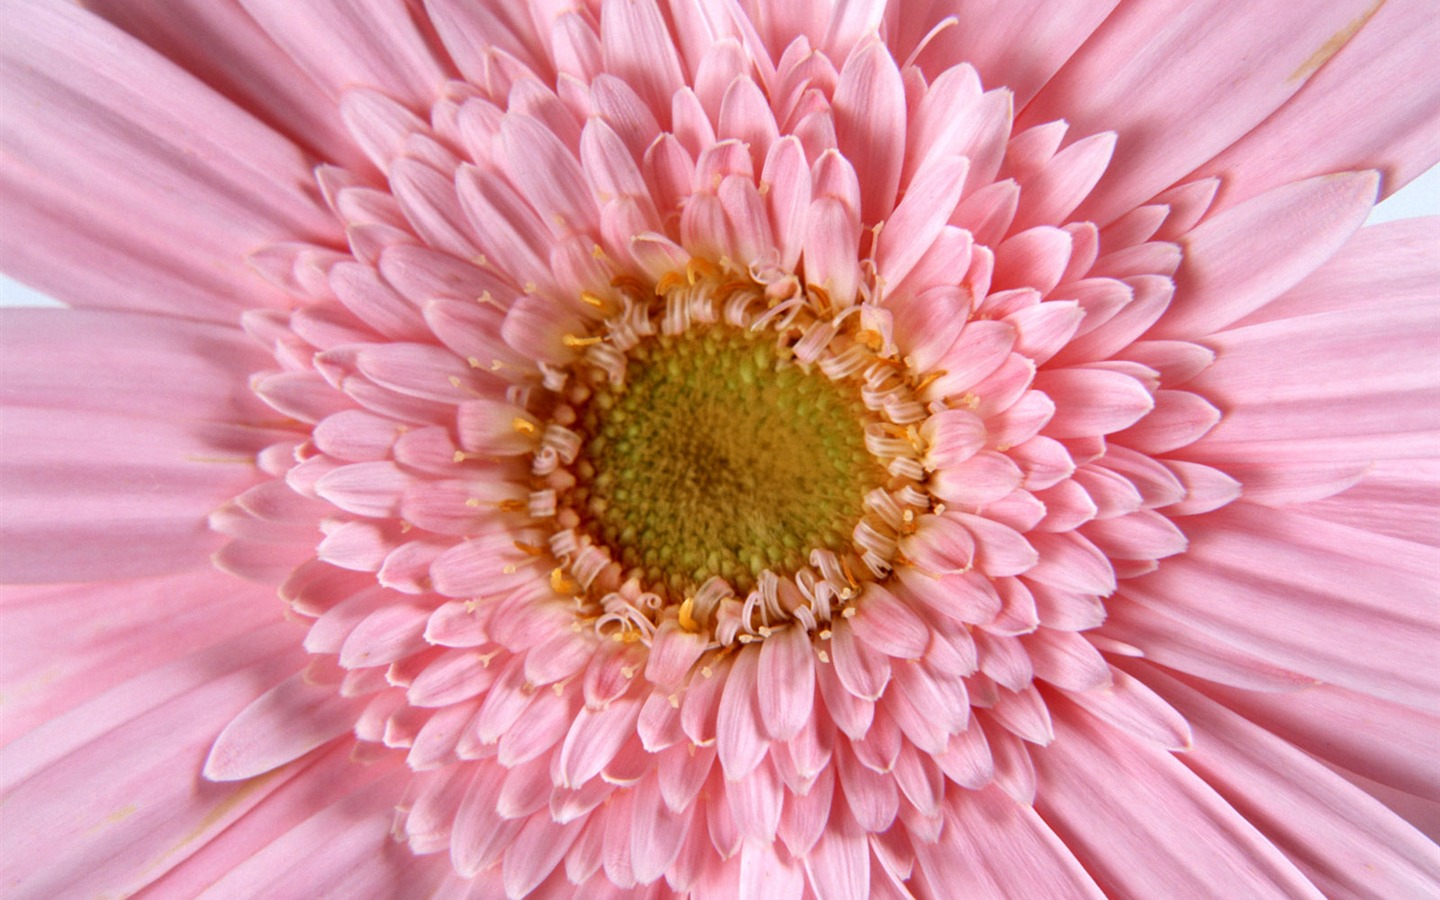 Flowers close-up (11) #2 - 1440x900